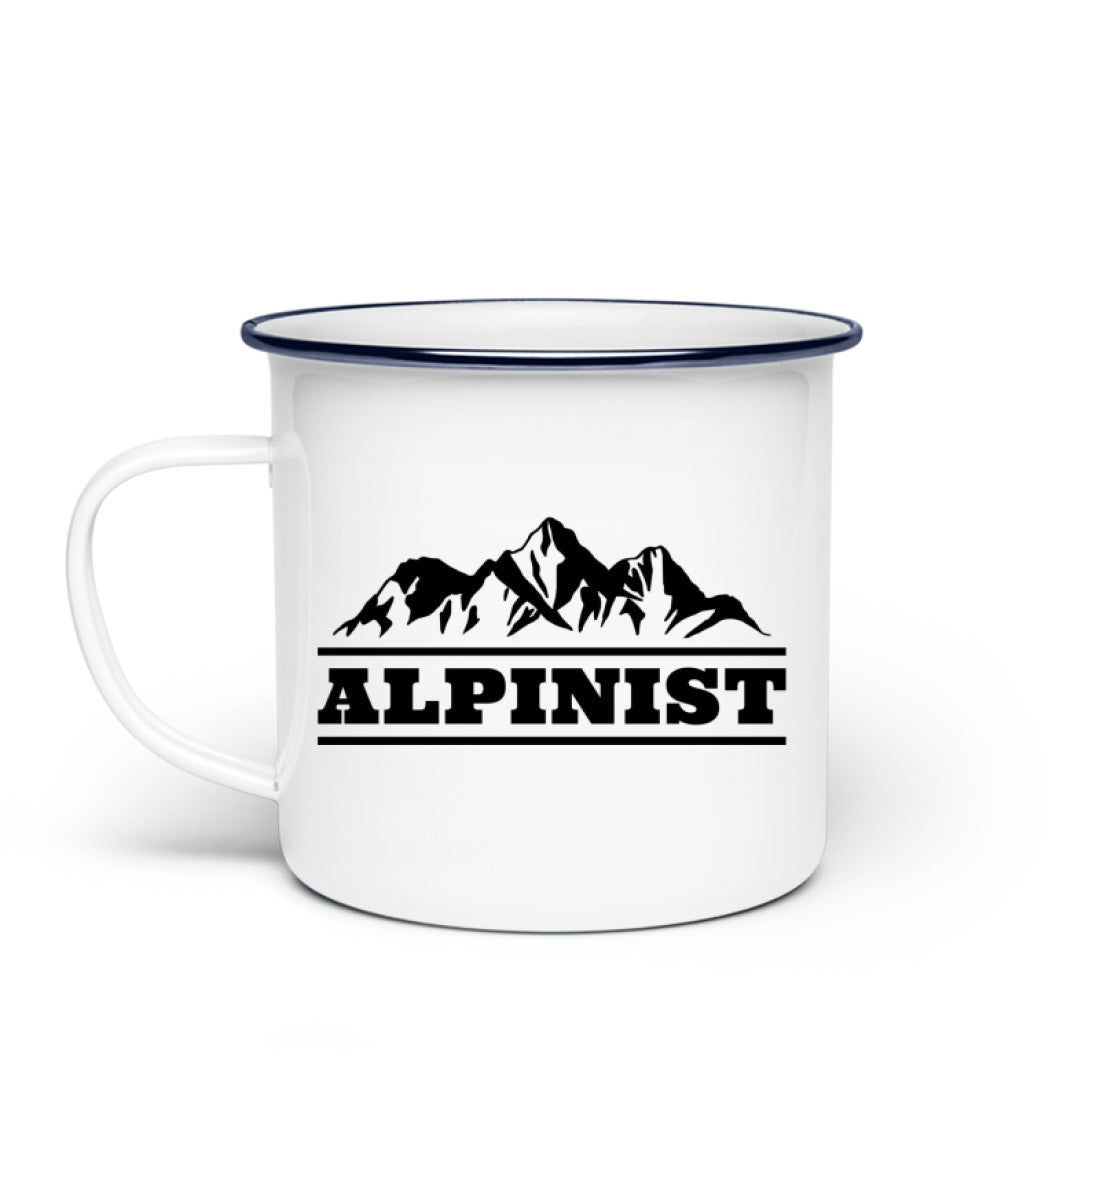 Alpinist - Emaille Tasse berge wandern Default Title